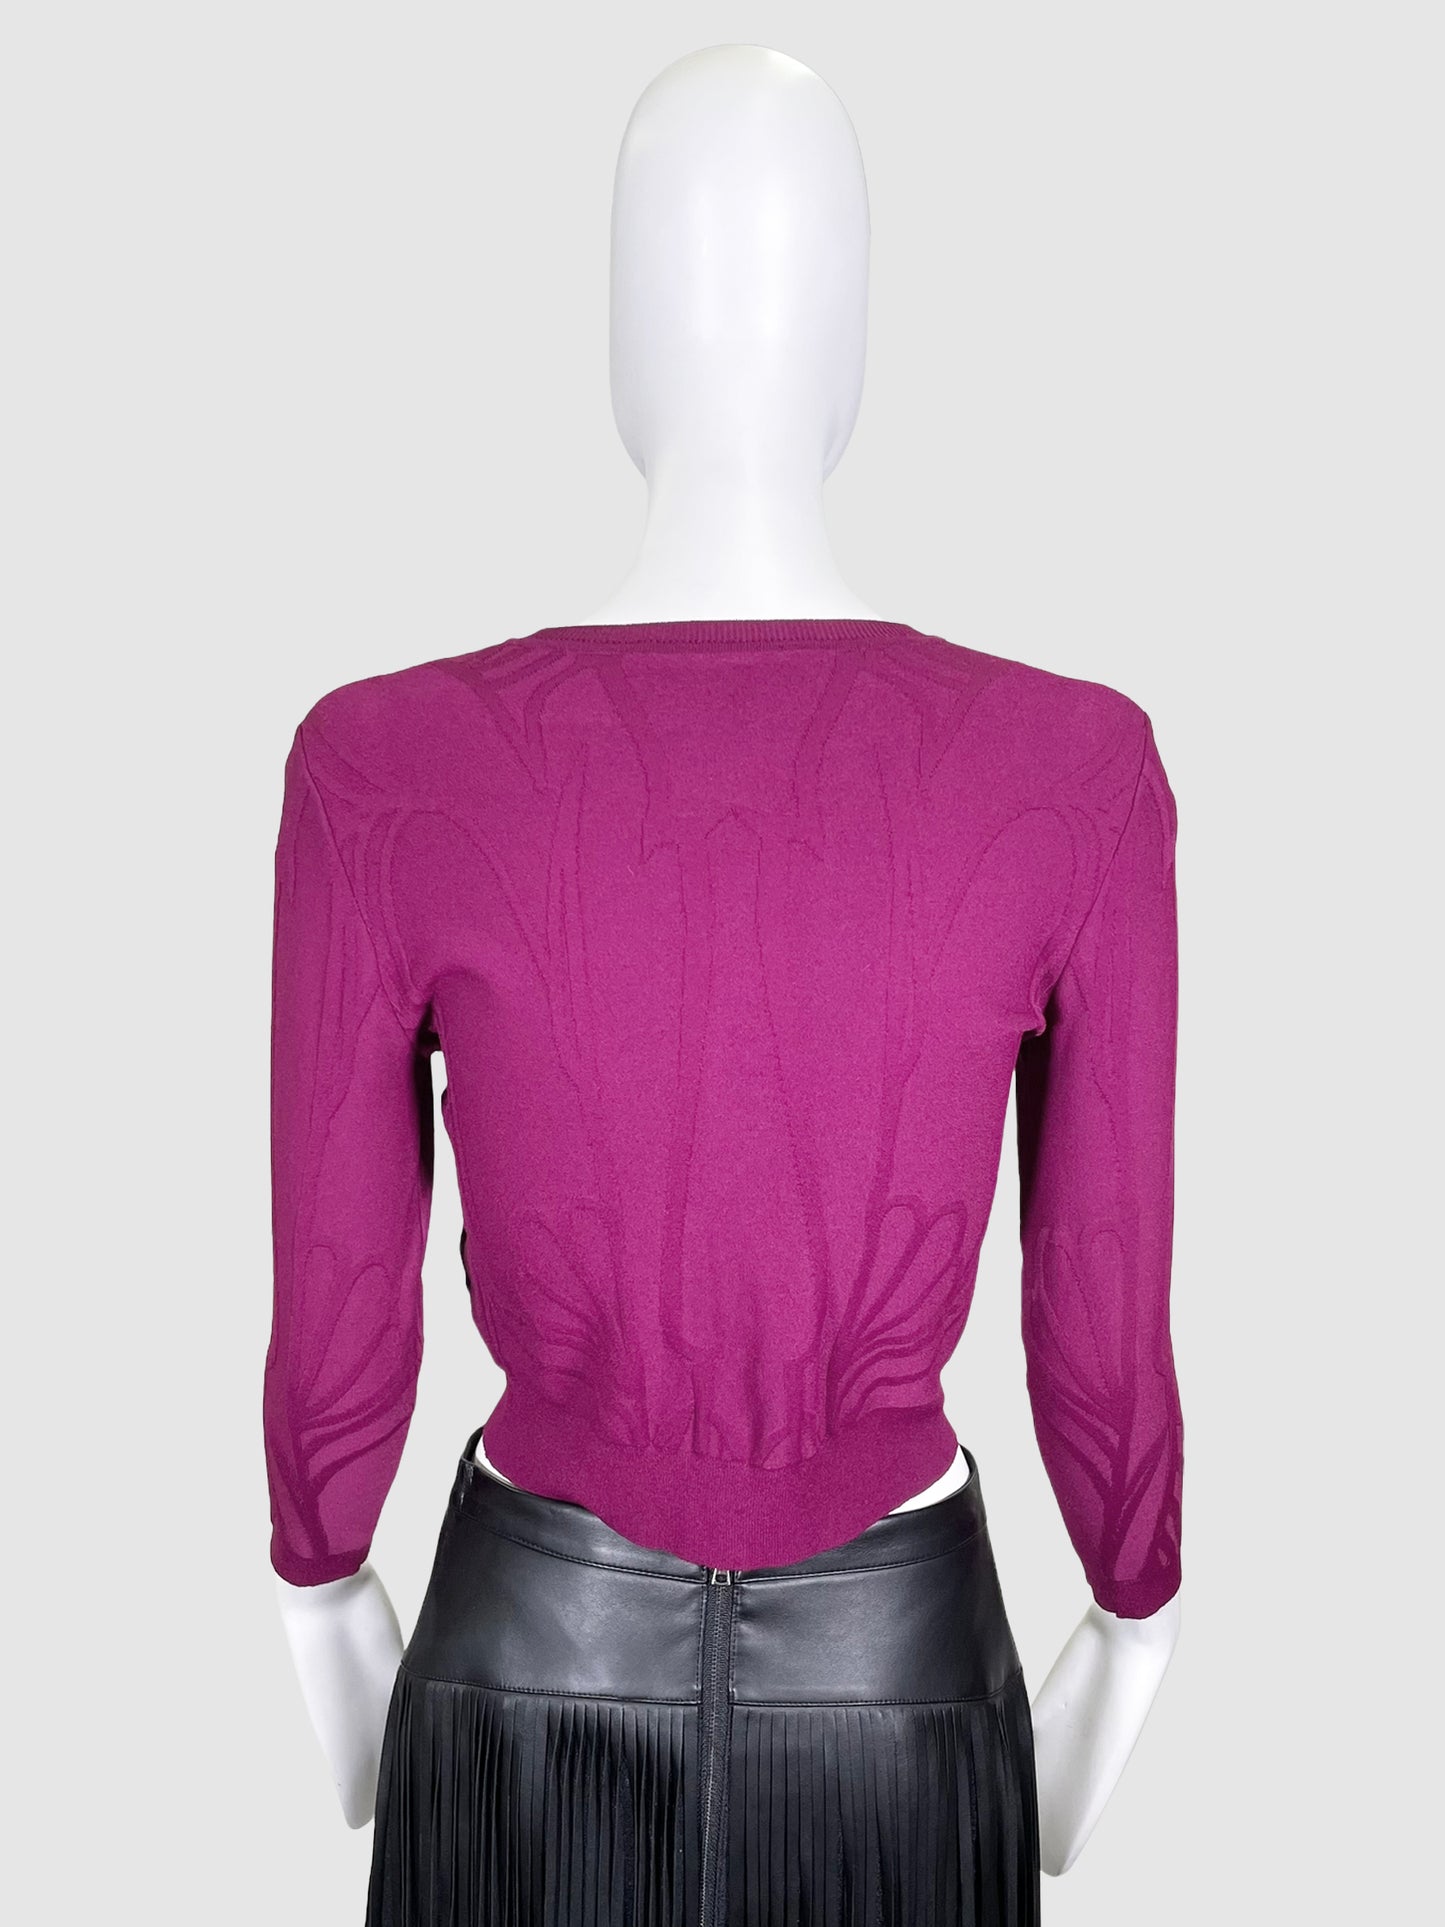 Gucci Knit Cropped Cardigan - Size XS